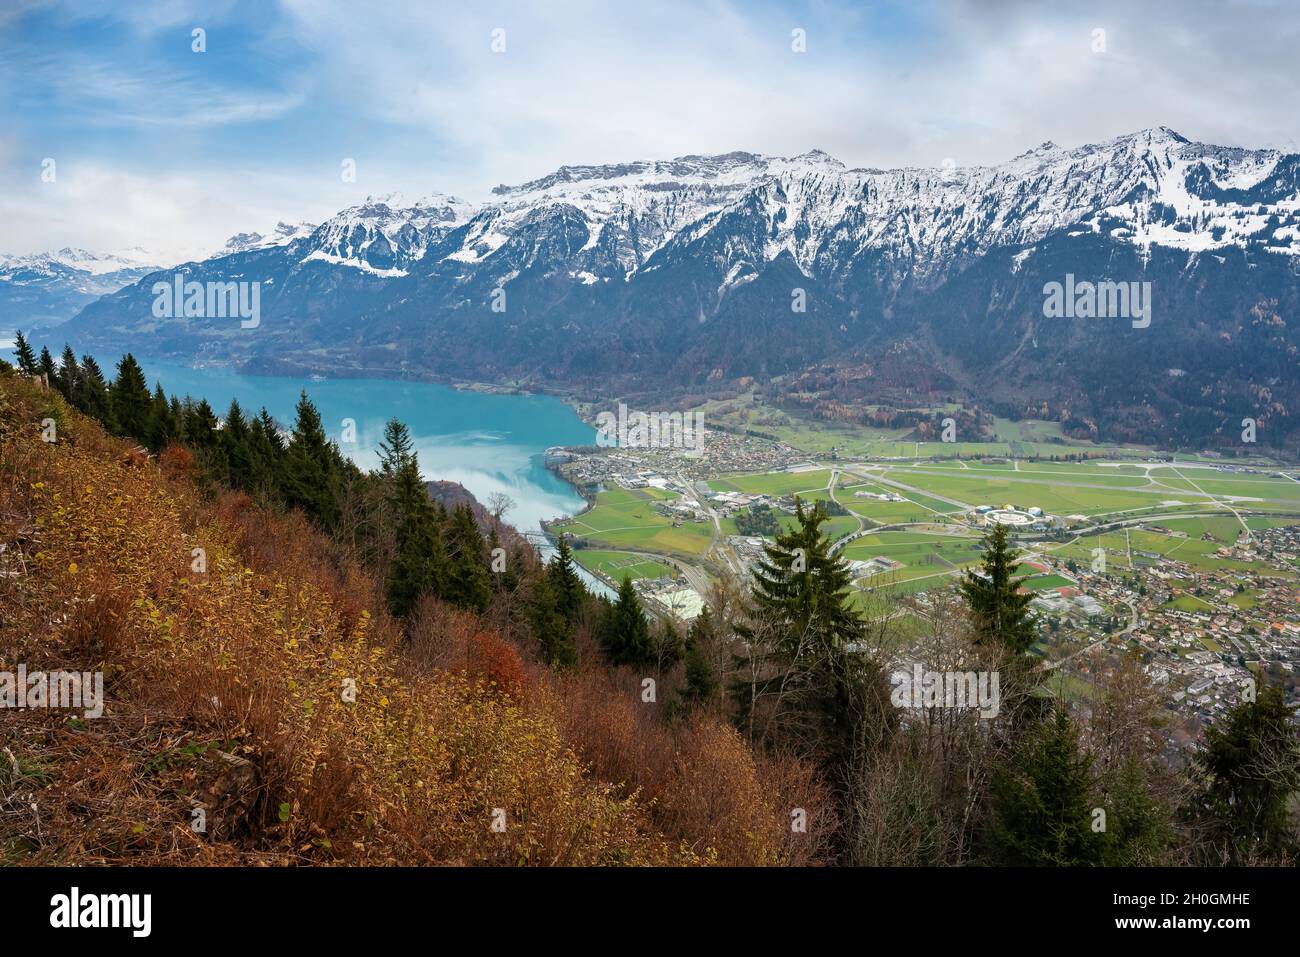 Aerial view of Lake Brienz - Interlaken, Switzerland Stock Photo